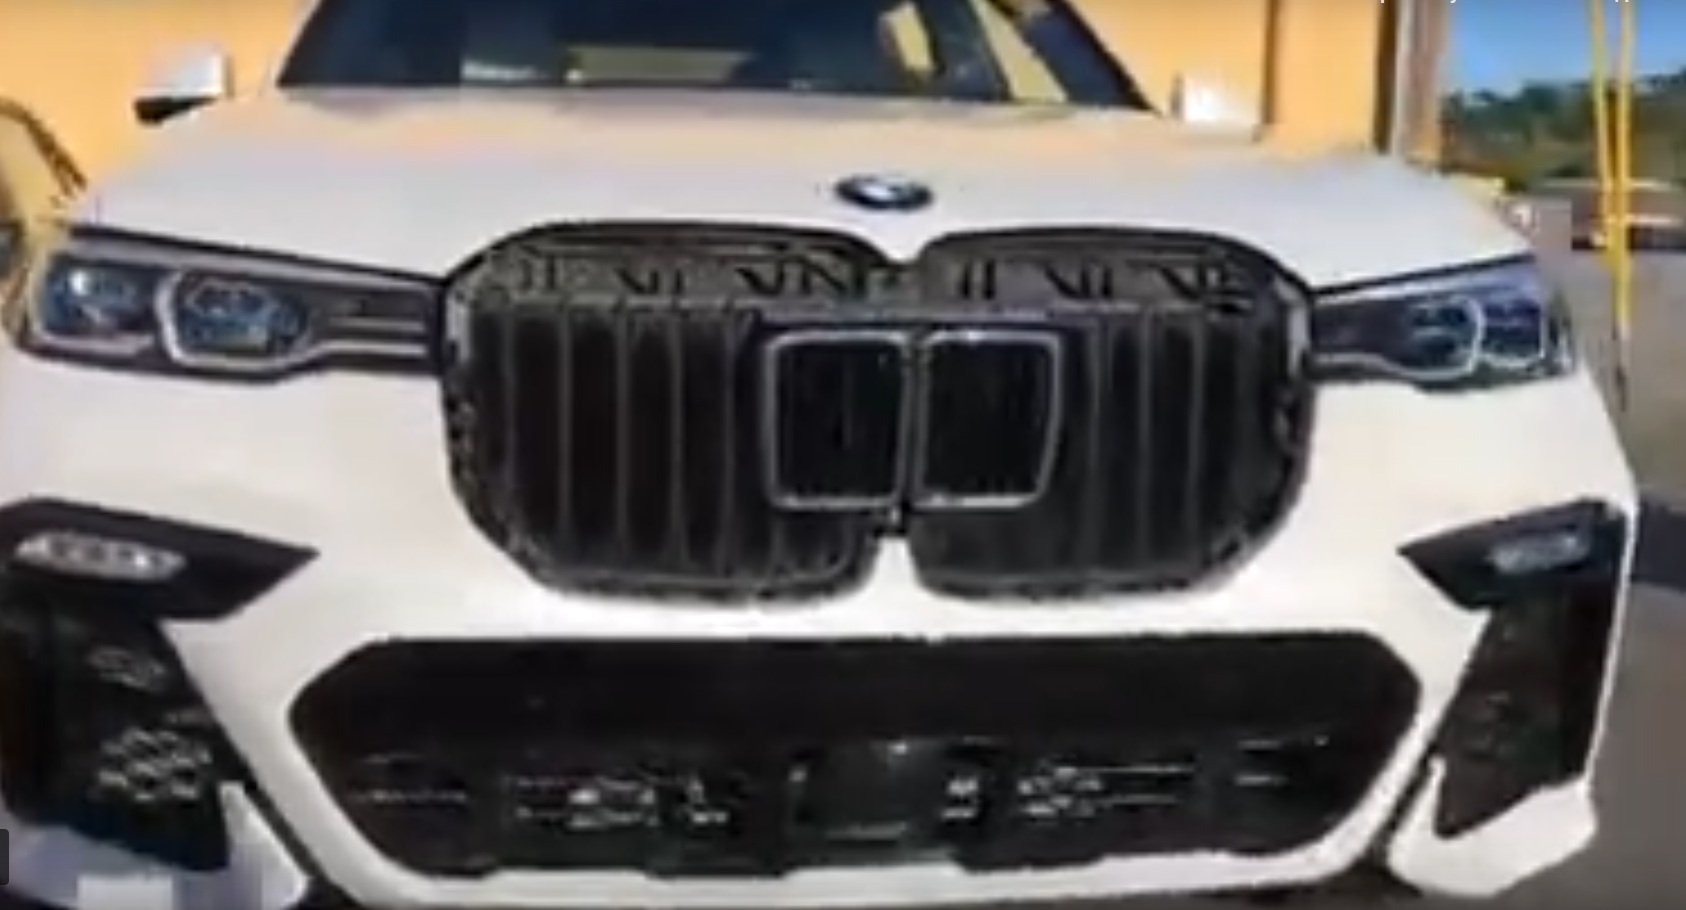 Фирменные ноздри BMW стали предметом насмешек и шуток